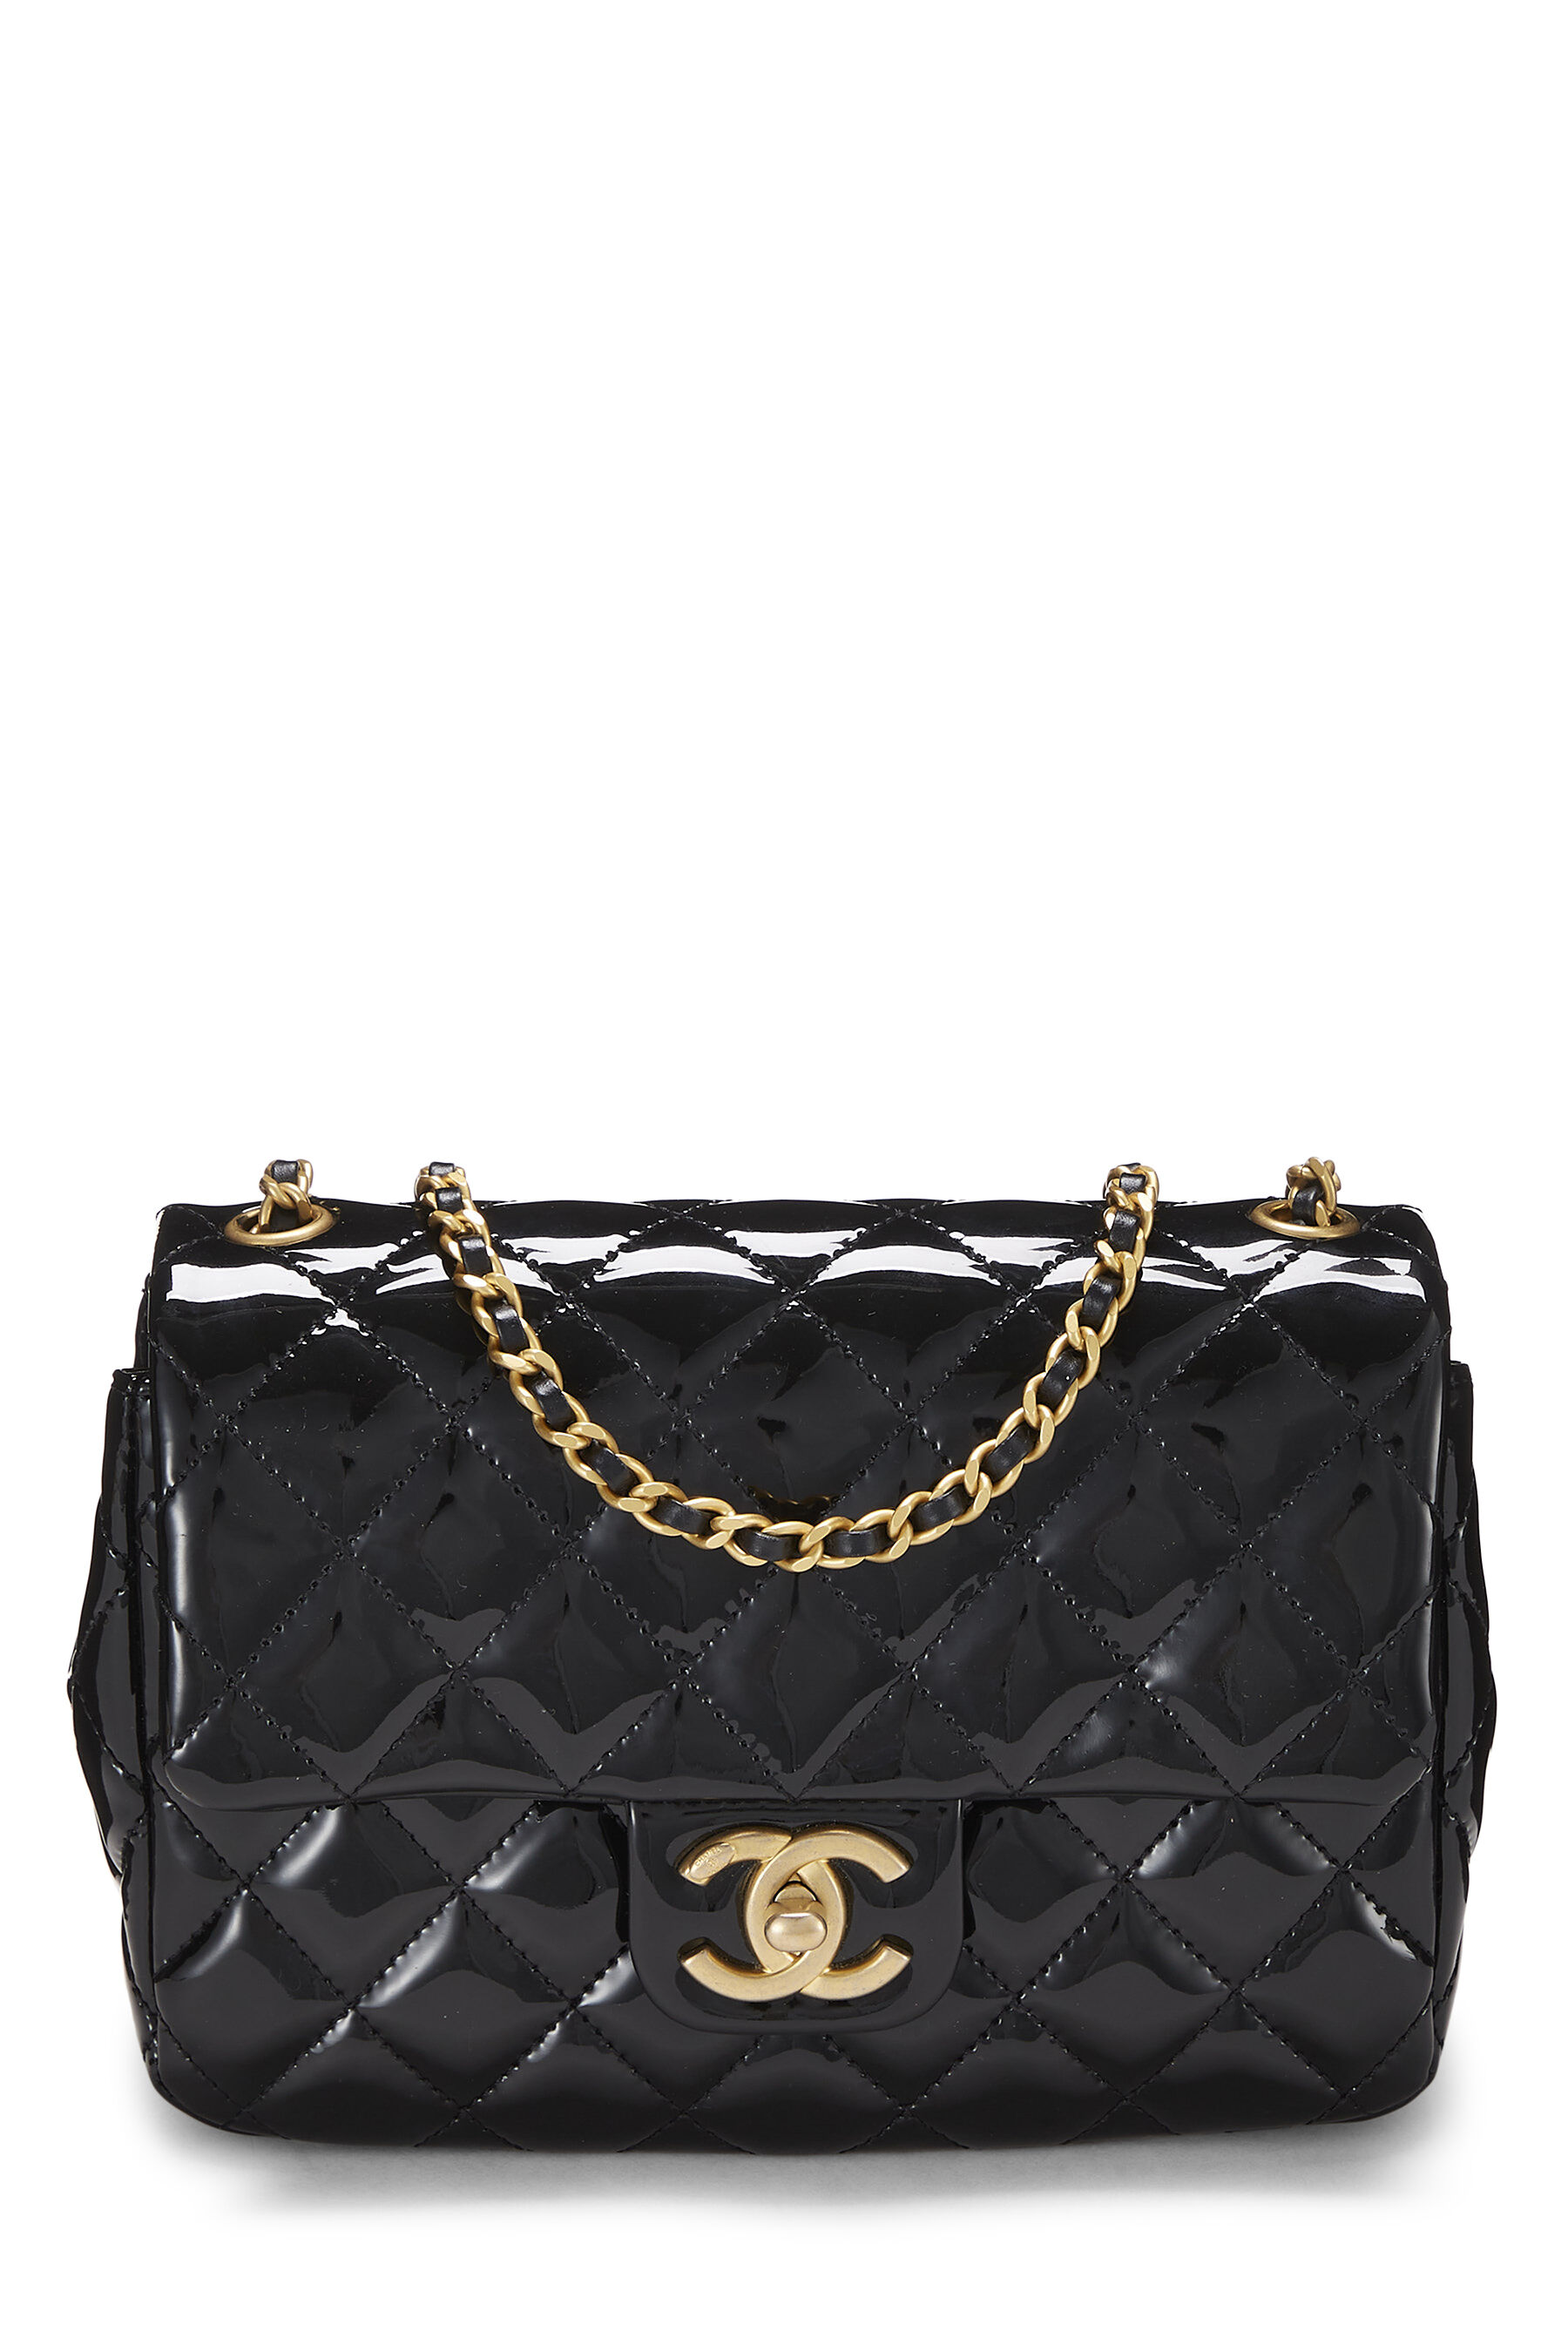 black chanel handbag